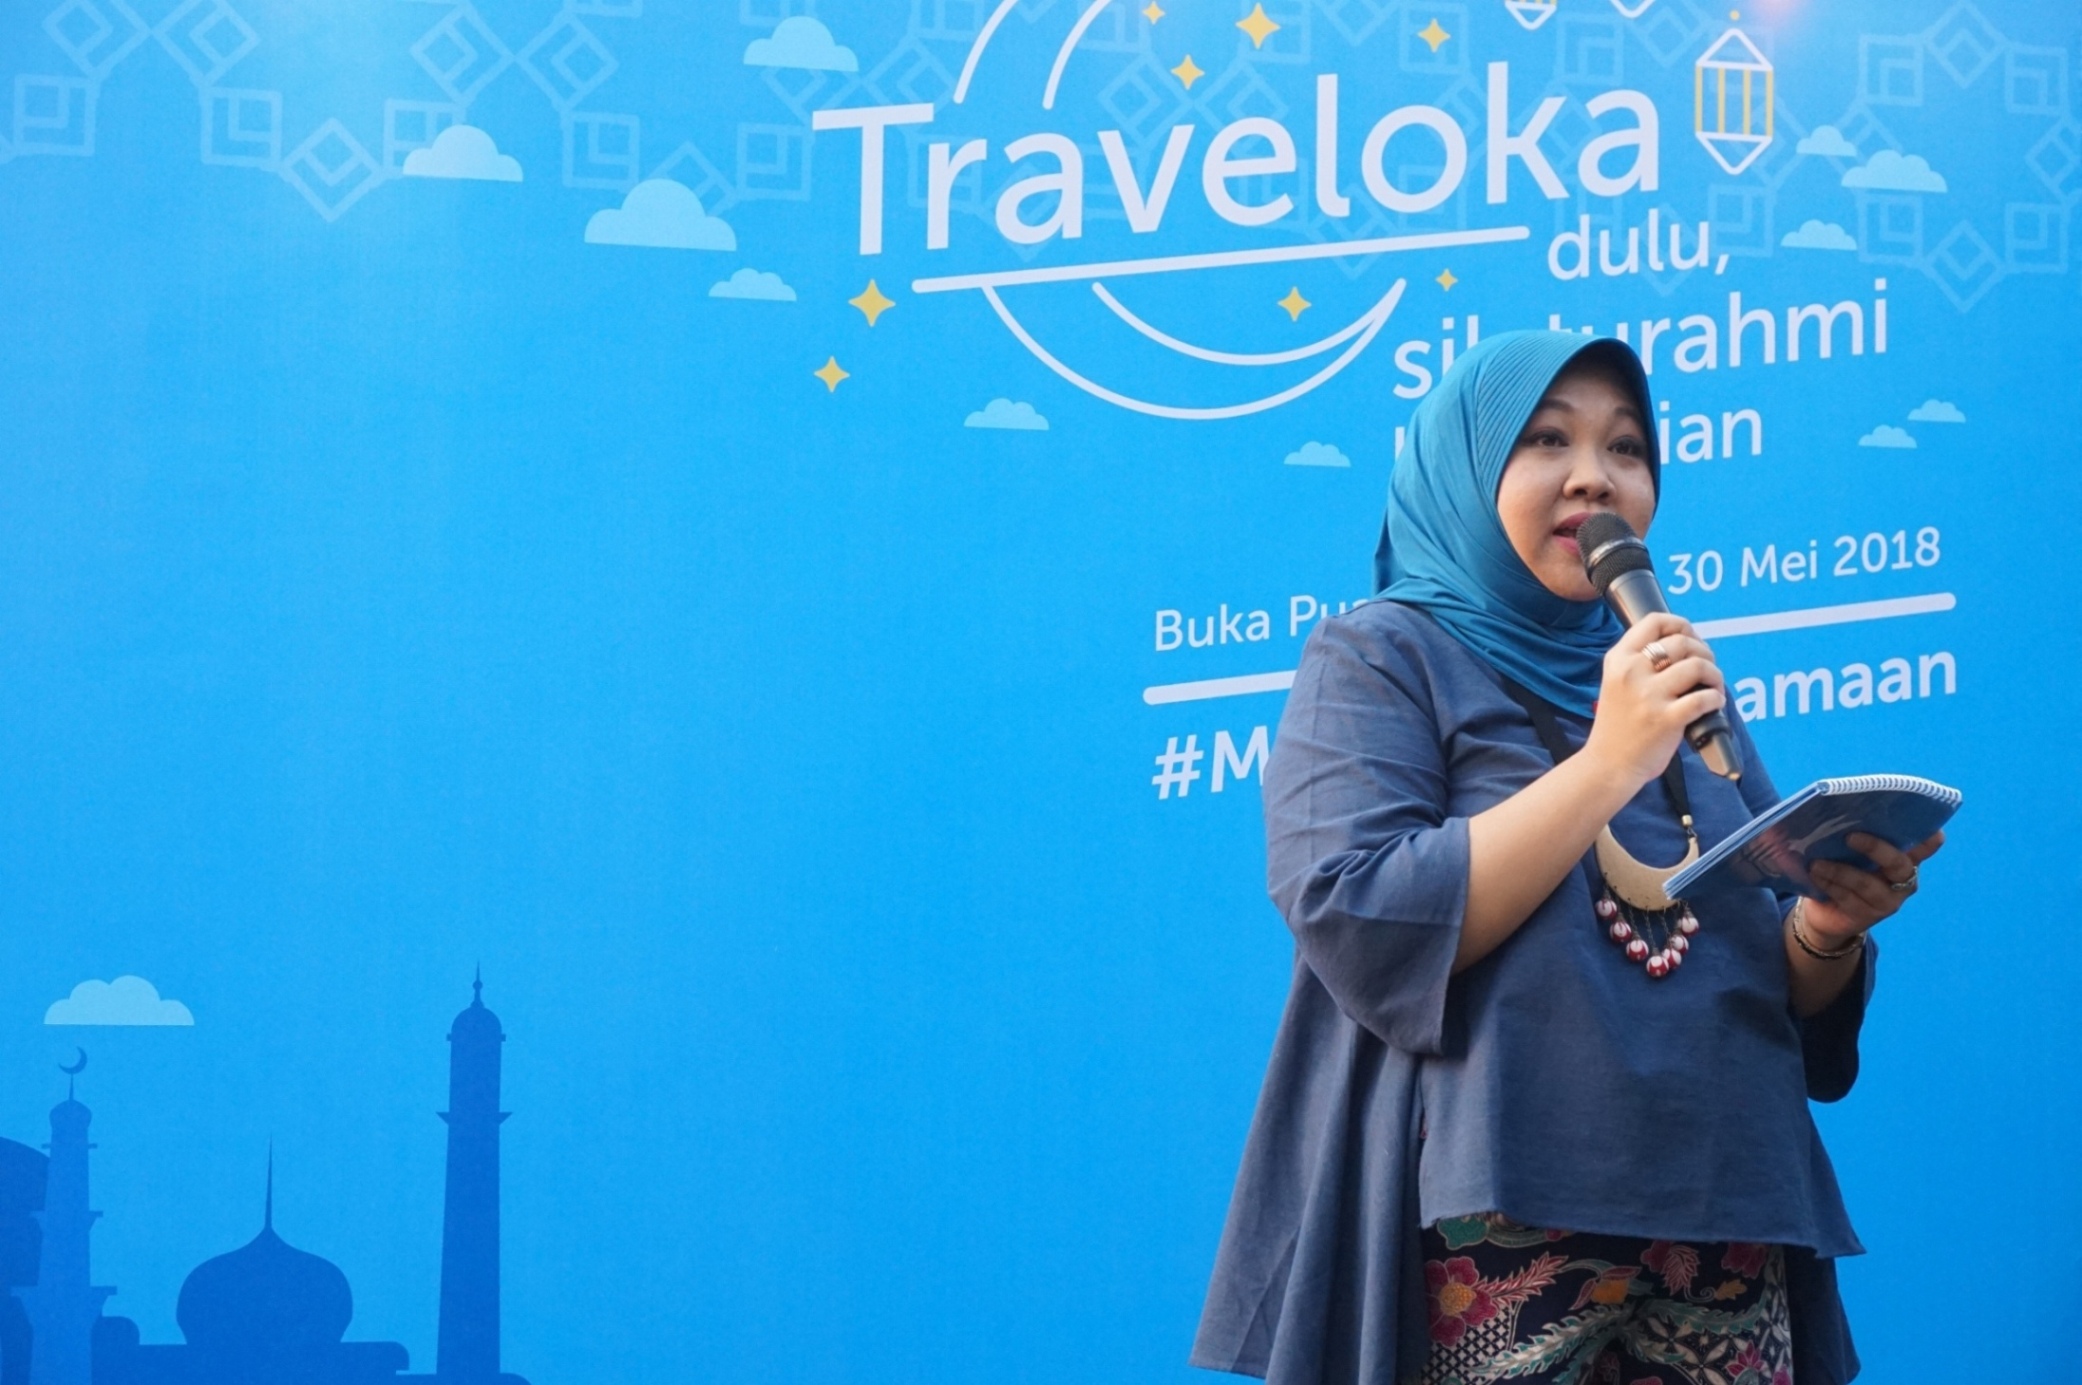 Public Relations Director Traveloka, Sufintri Rahayu